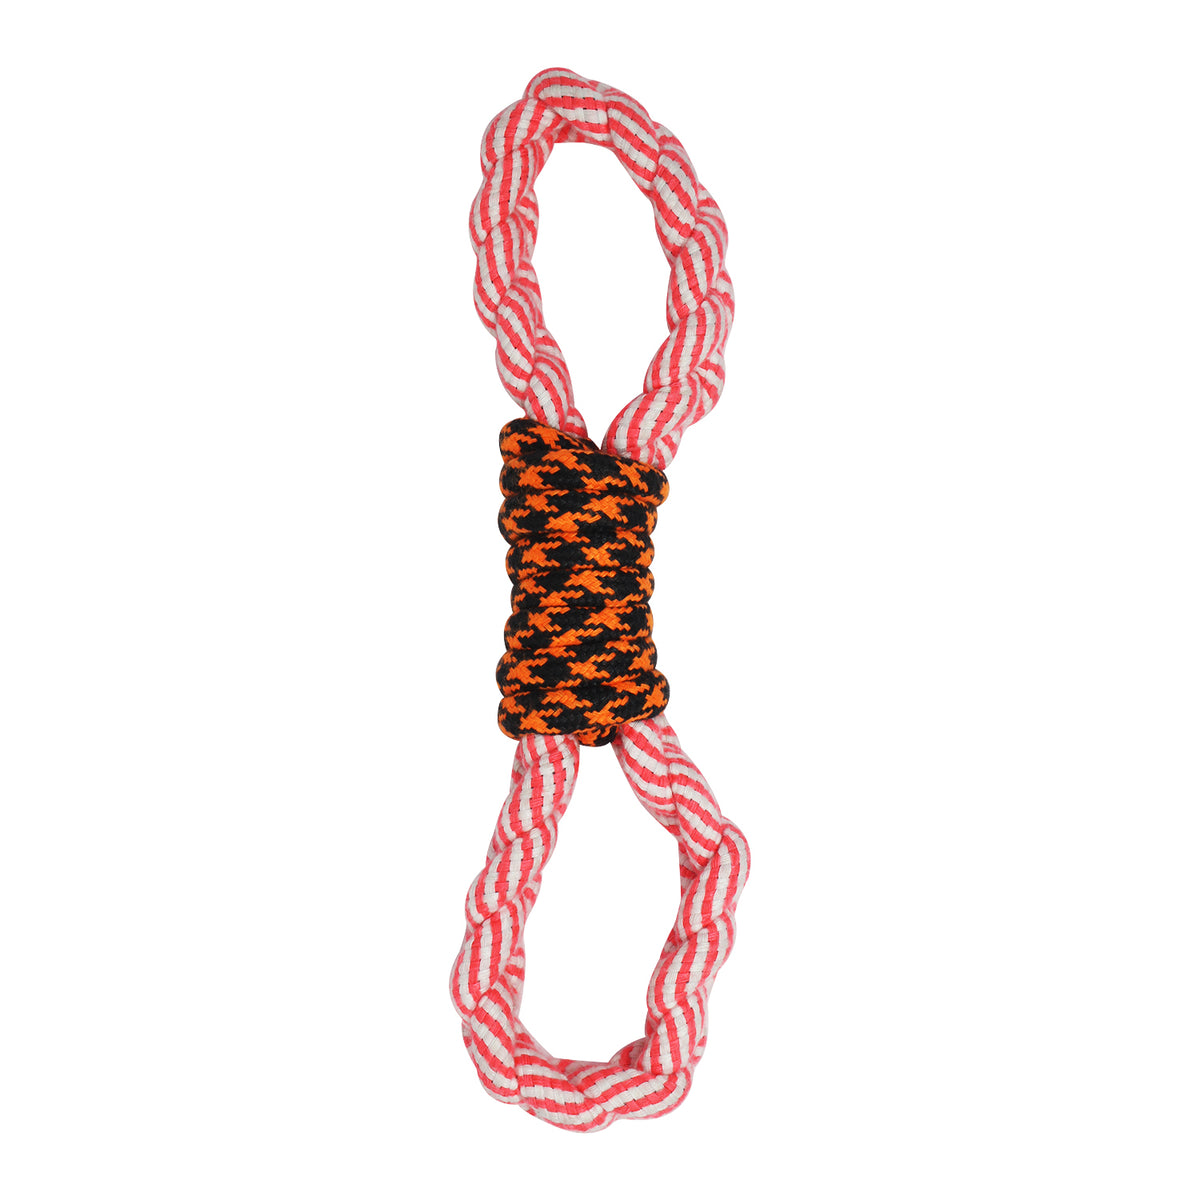 Gearbuff Tug No War Rope chew Dental Toy, Orange Black Pink Stripe